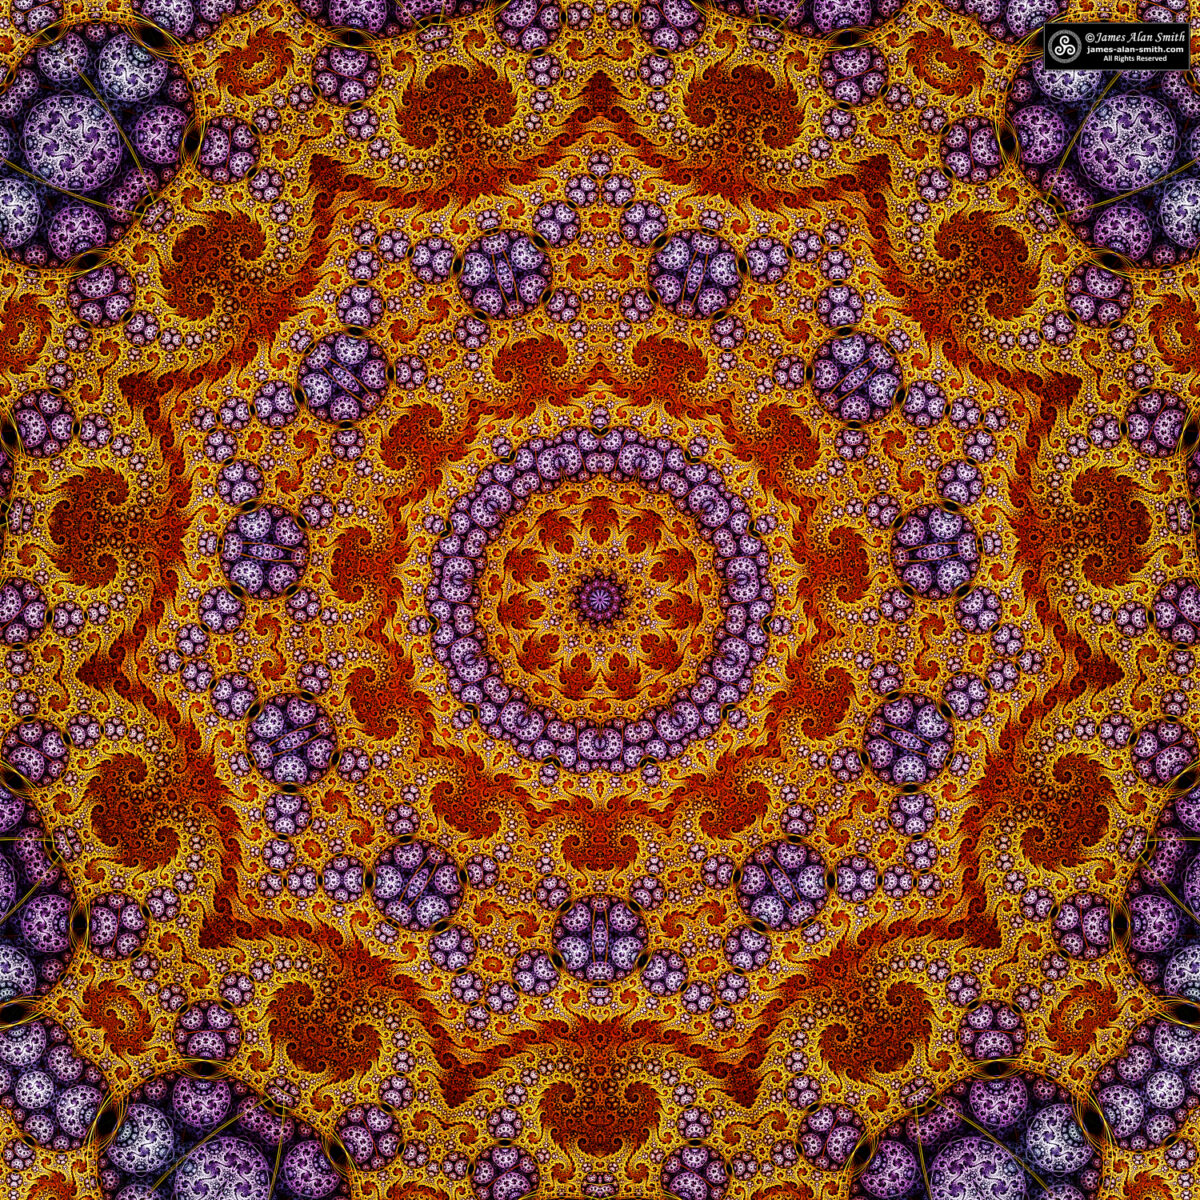 Unusual Mandala Series #042522: Artwork by James Alan Smith